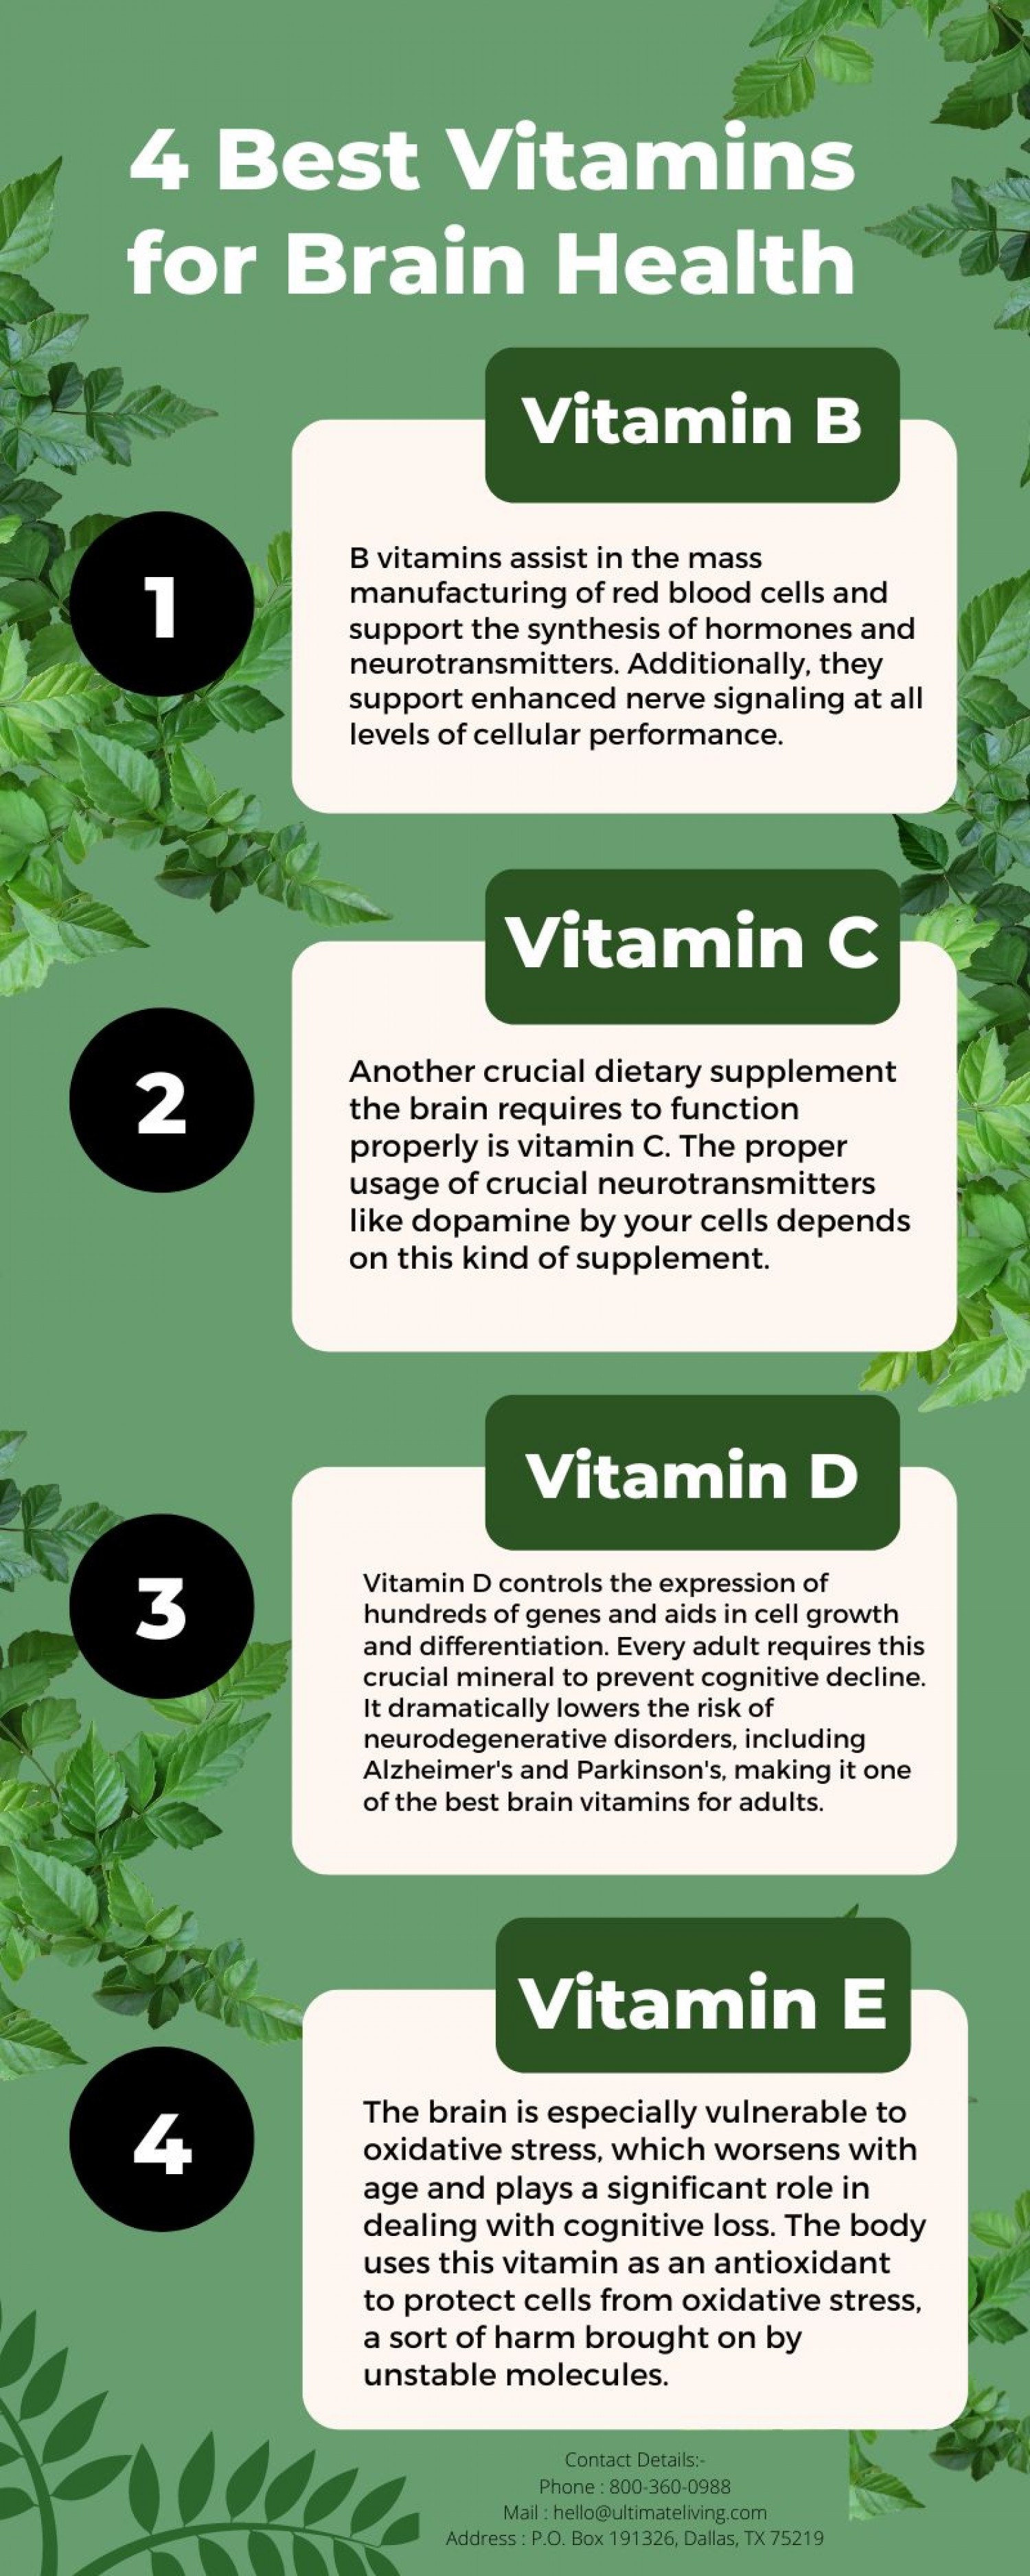 Best Vitamins for Brain Health Infographic